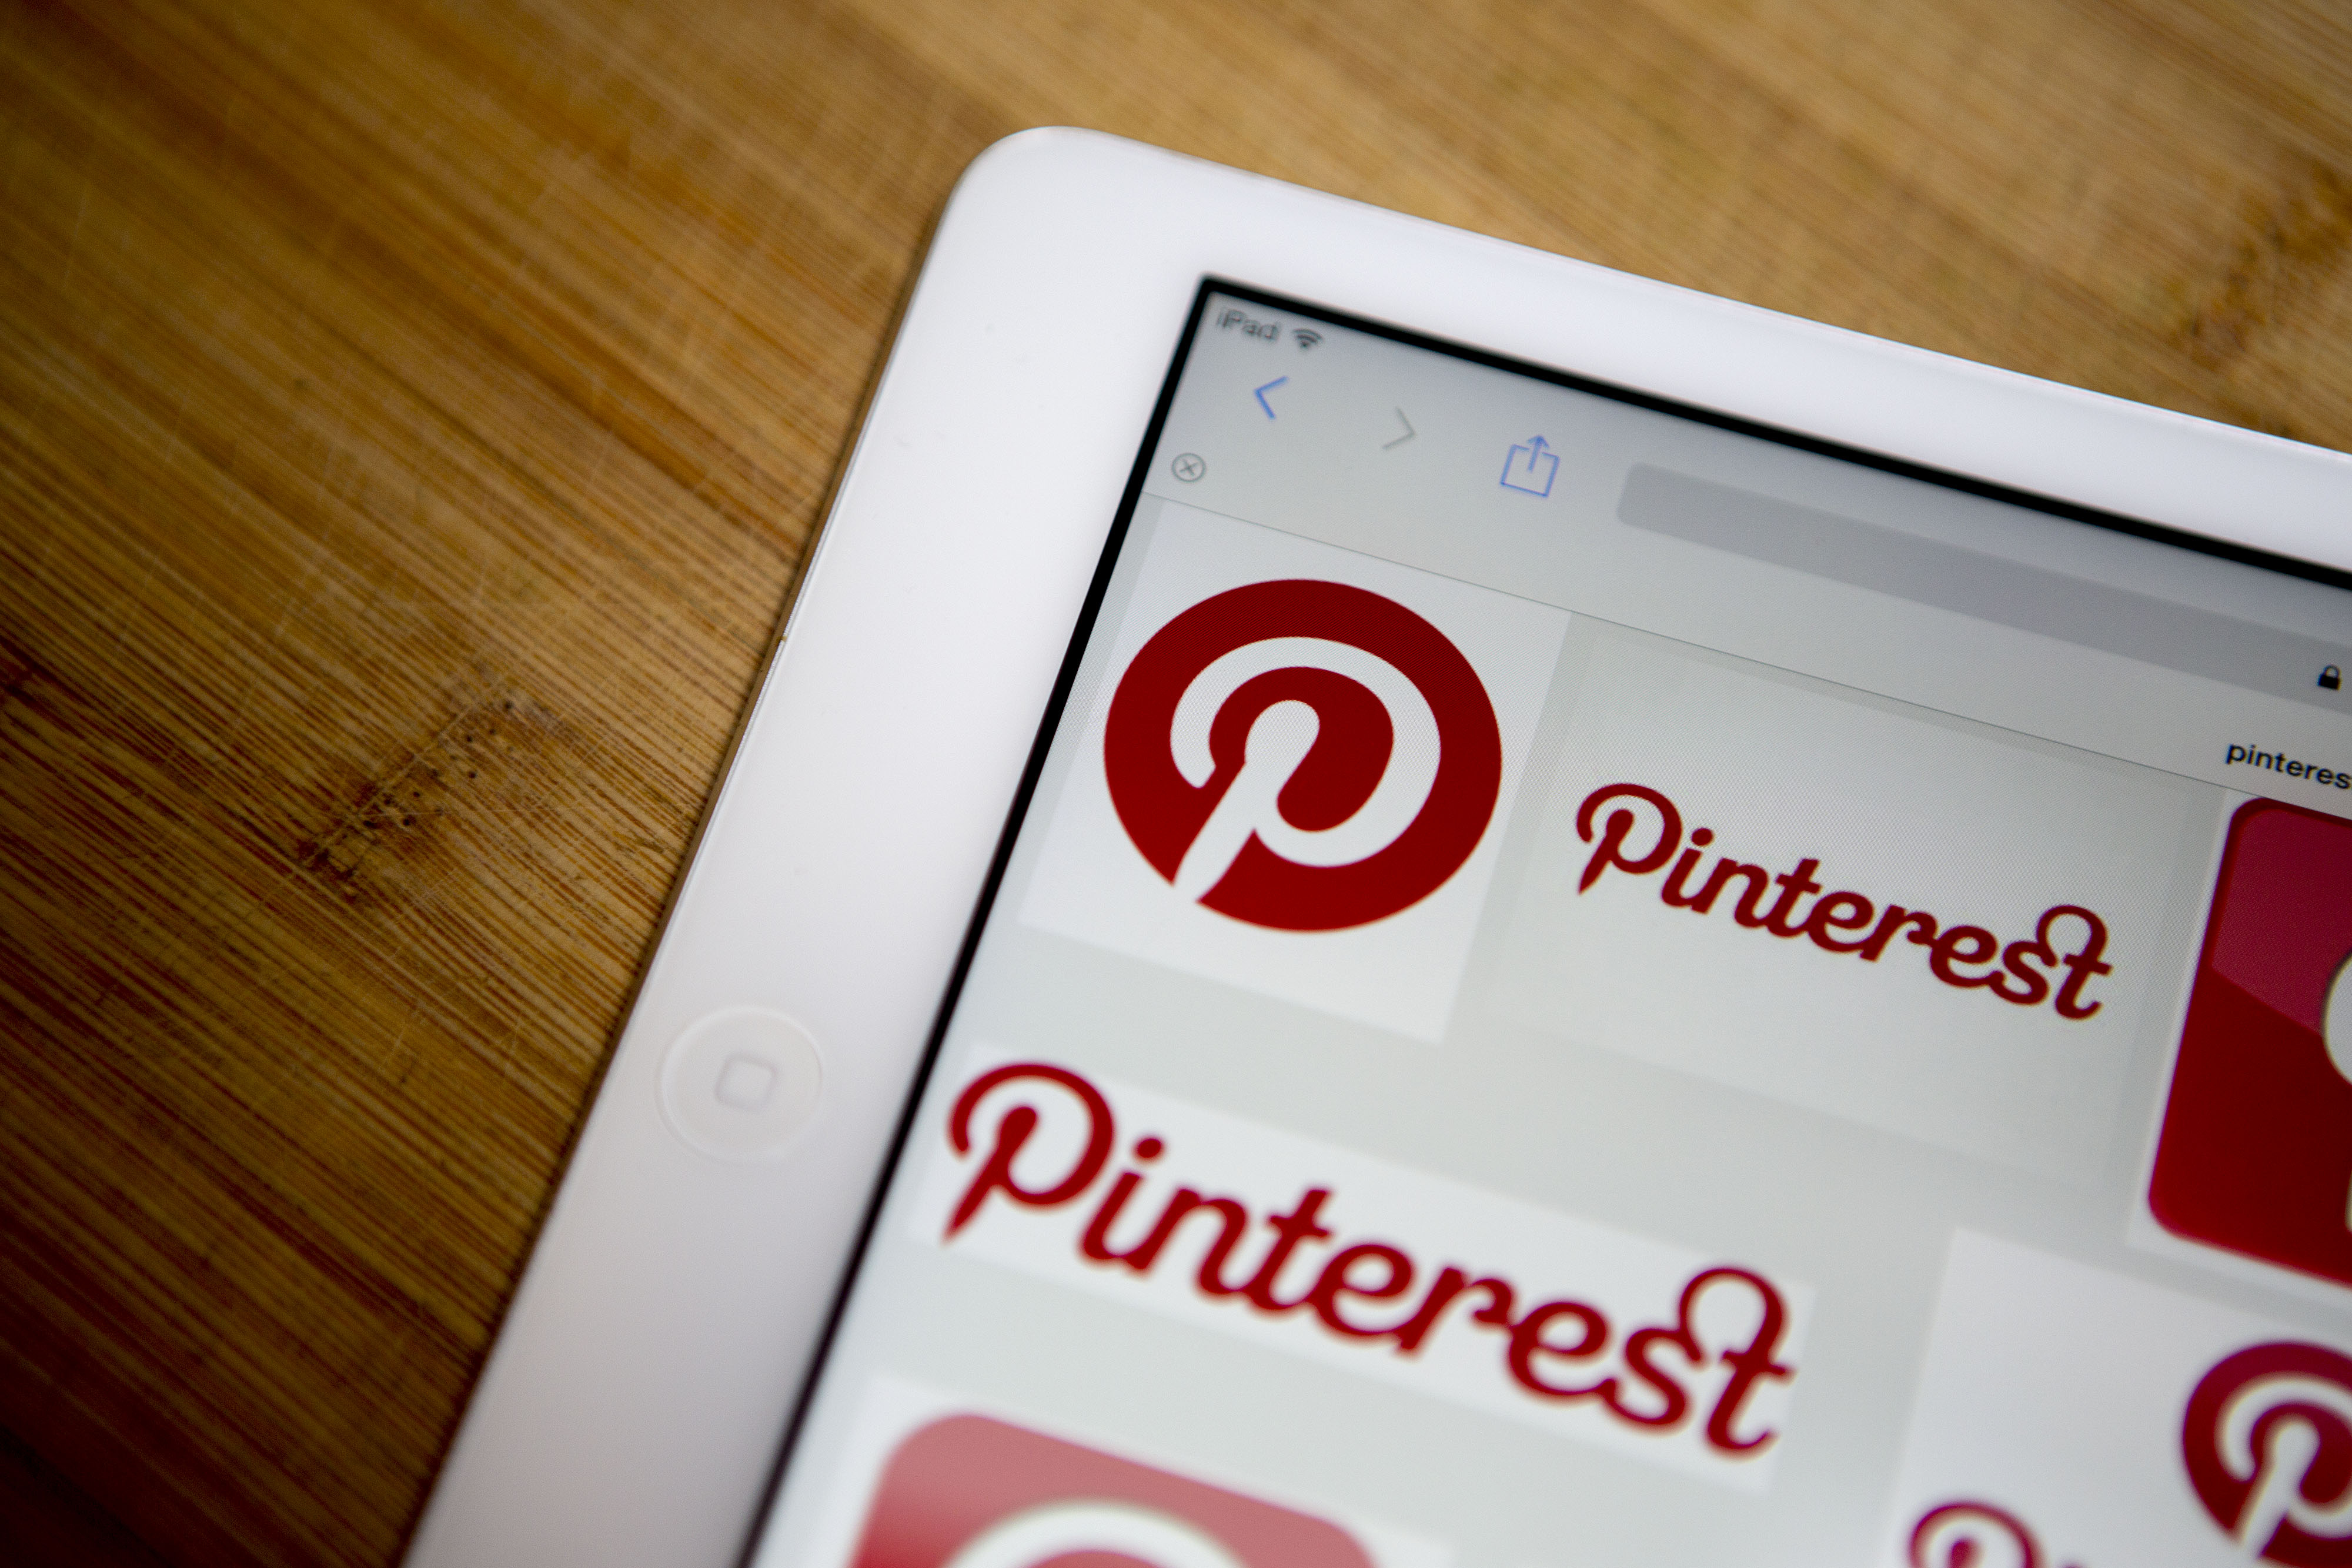 An image of Pinterest on an iPad